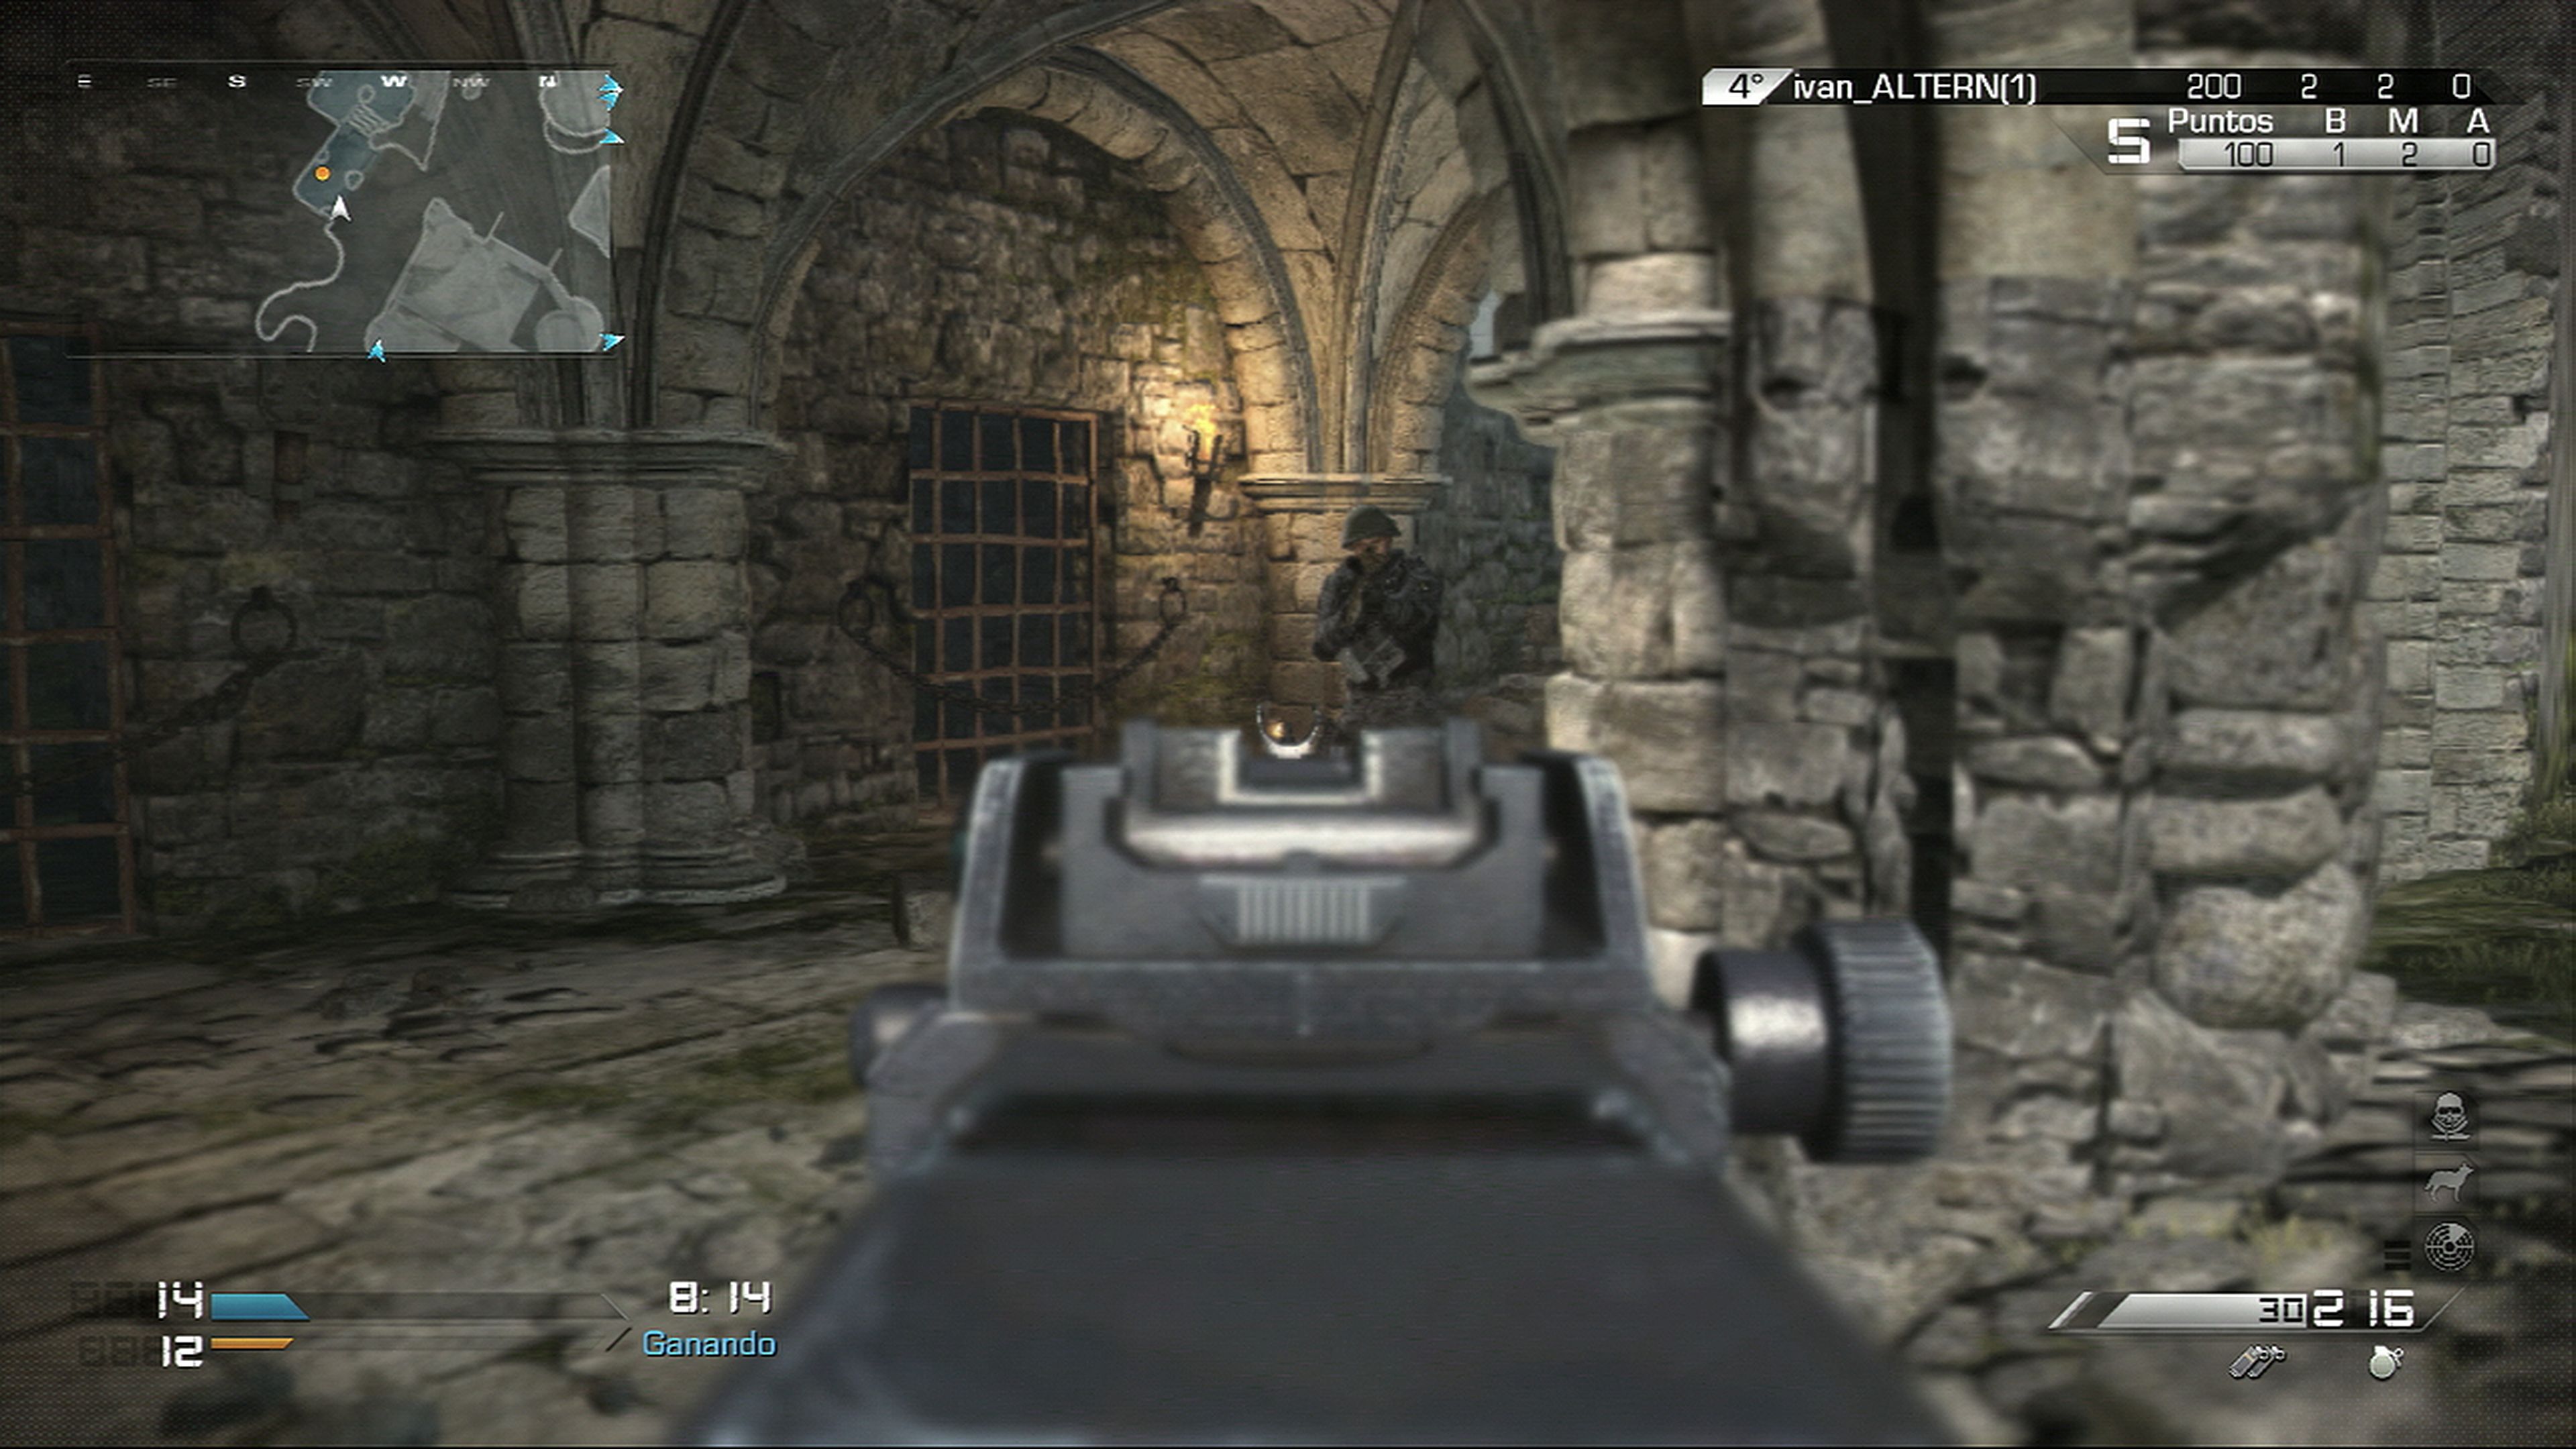 Análisis de Call of Duty Ghosts